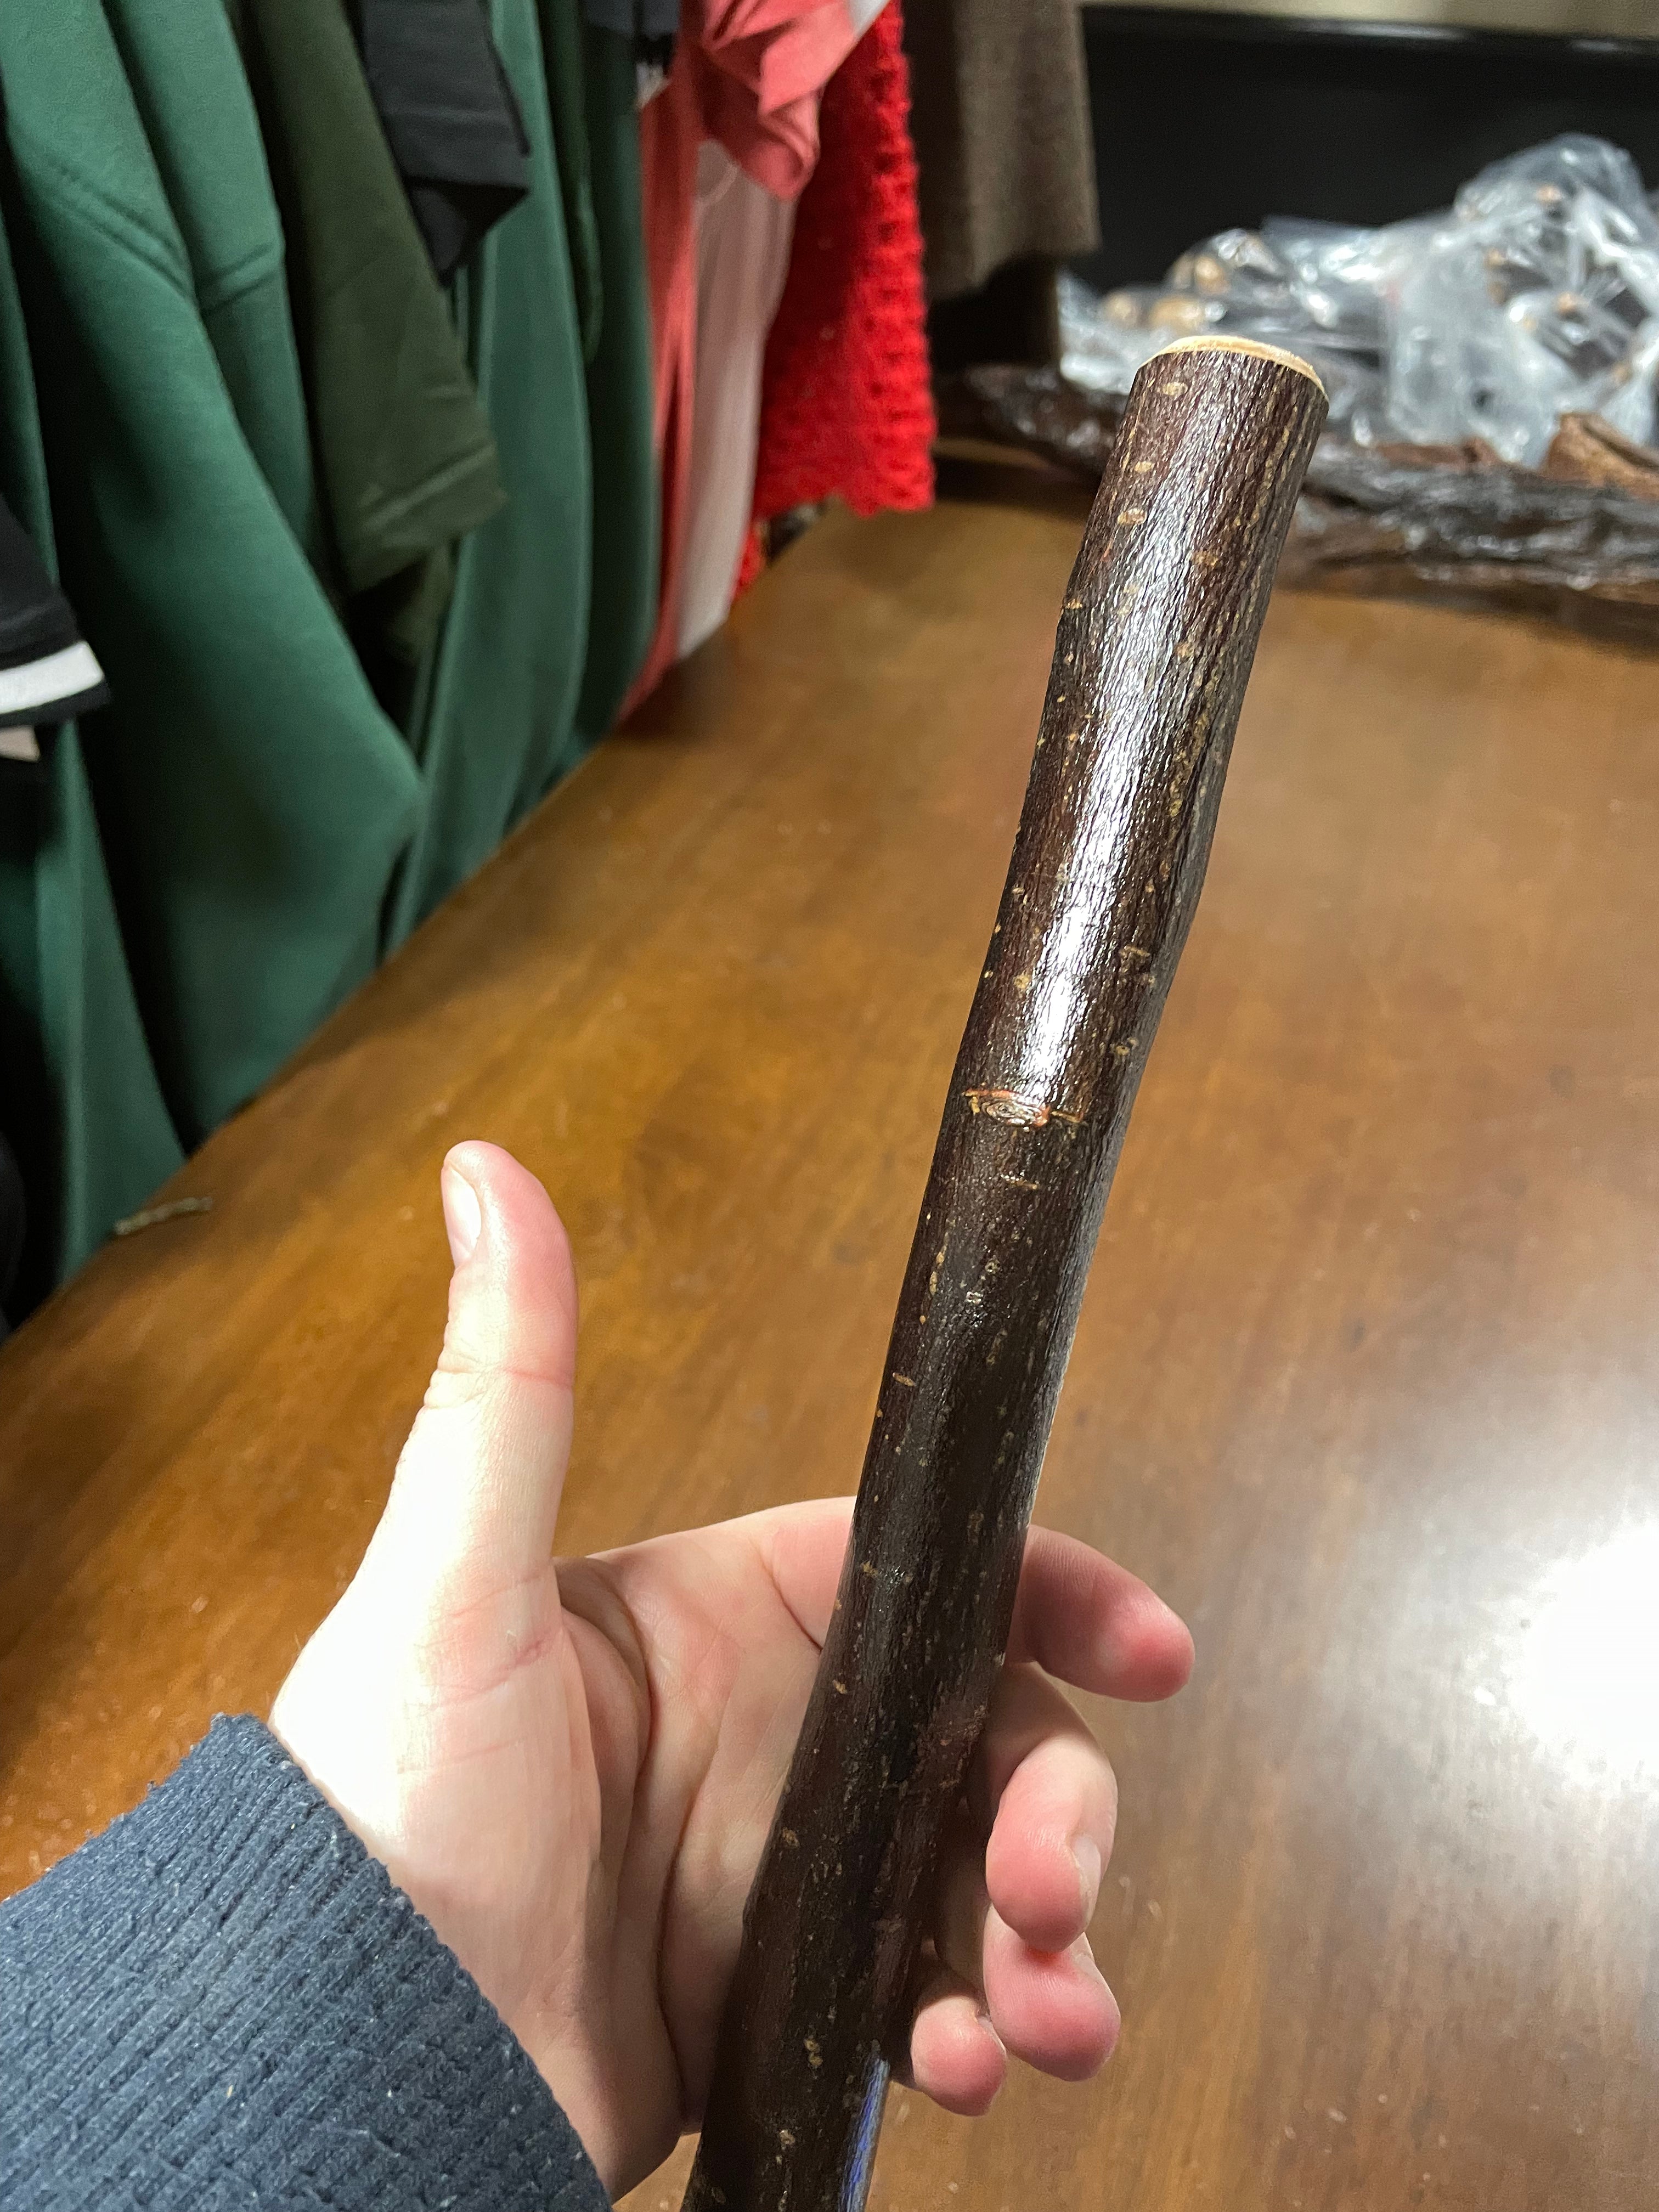 Blackthorn Hiking Stick - 52 inch - Handmade in Ireland